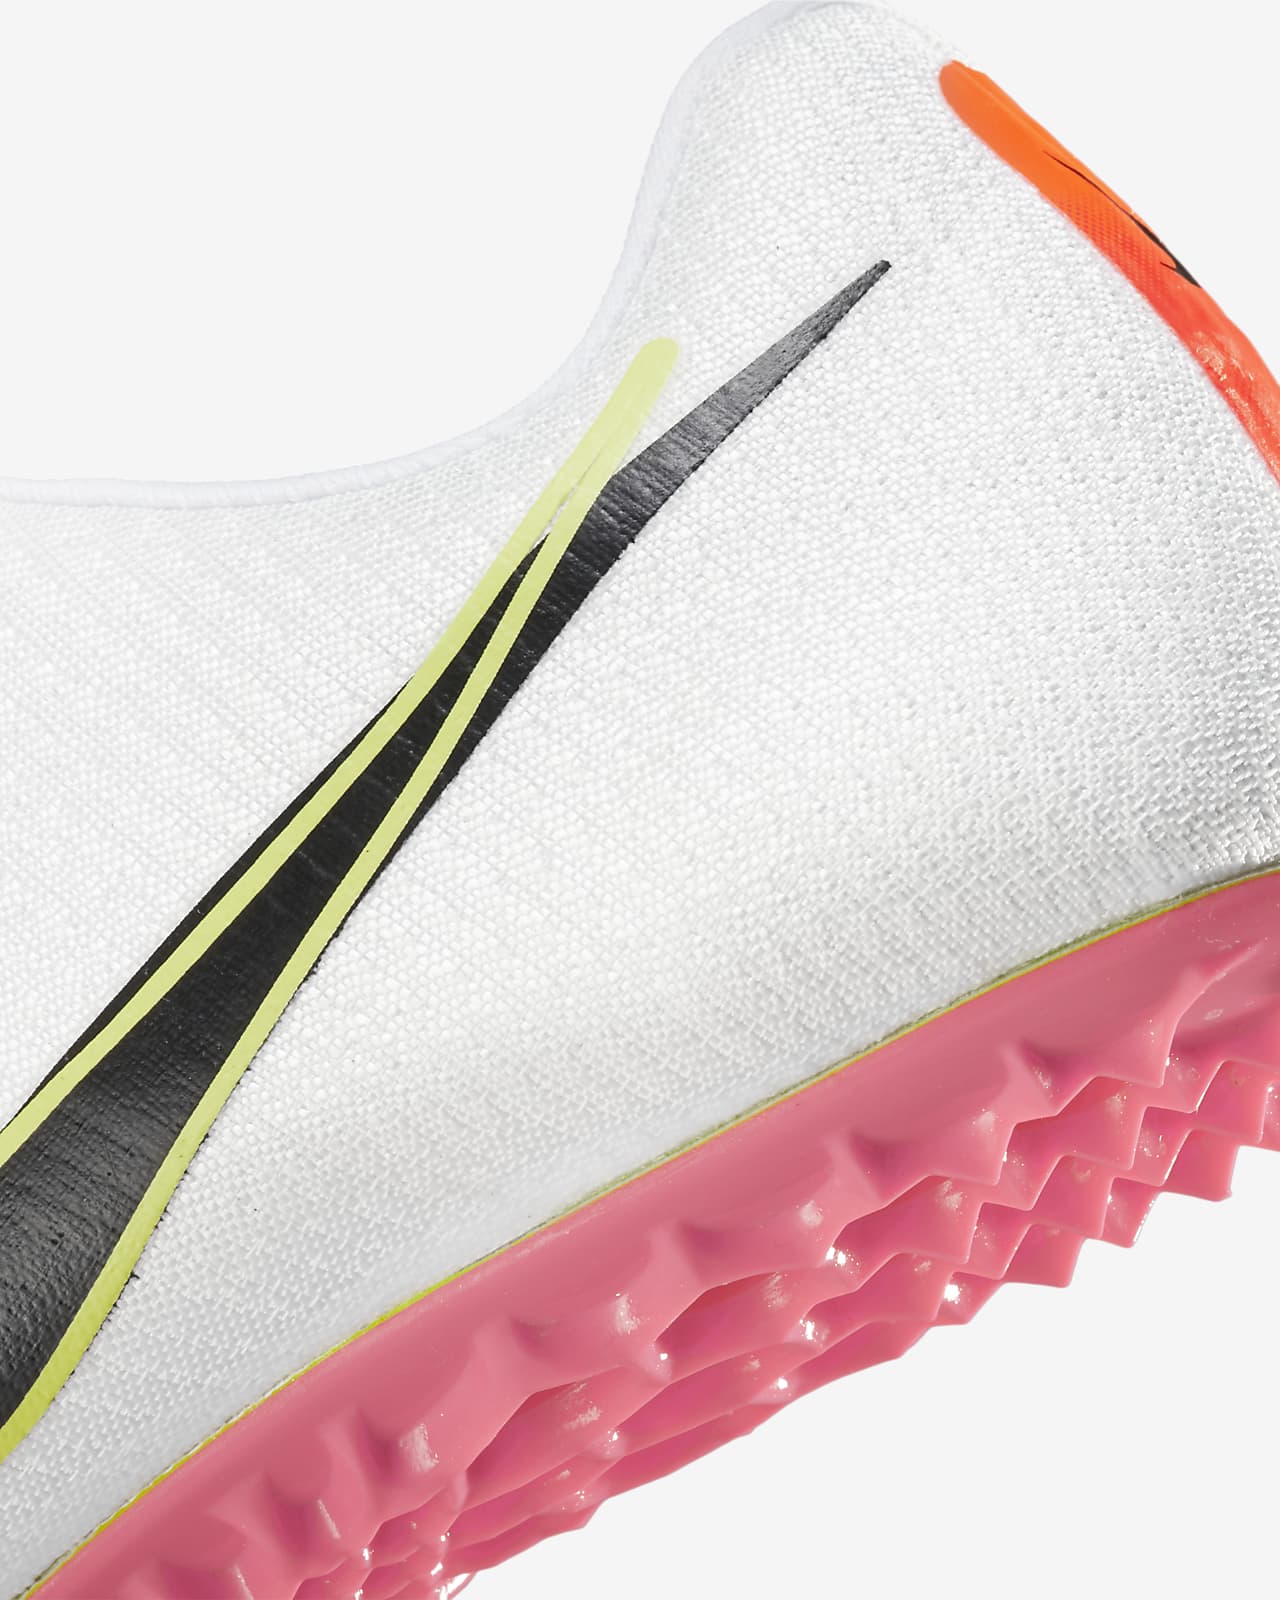 Nike Zoom Ja Fly 3 Track & Field Sprinting Spikes